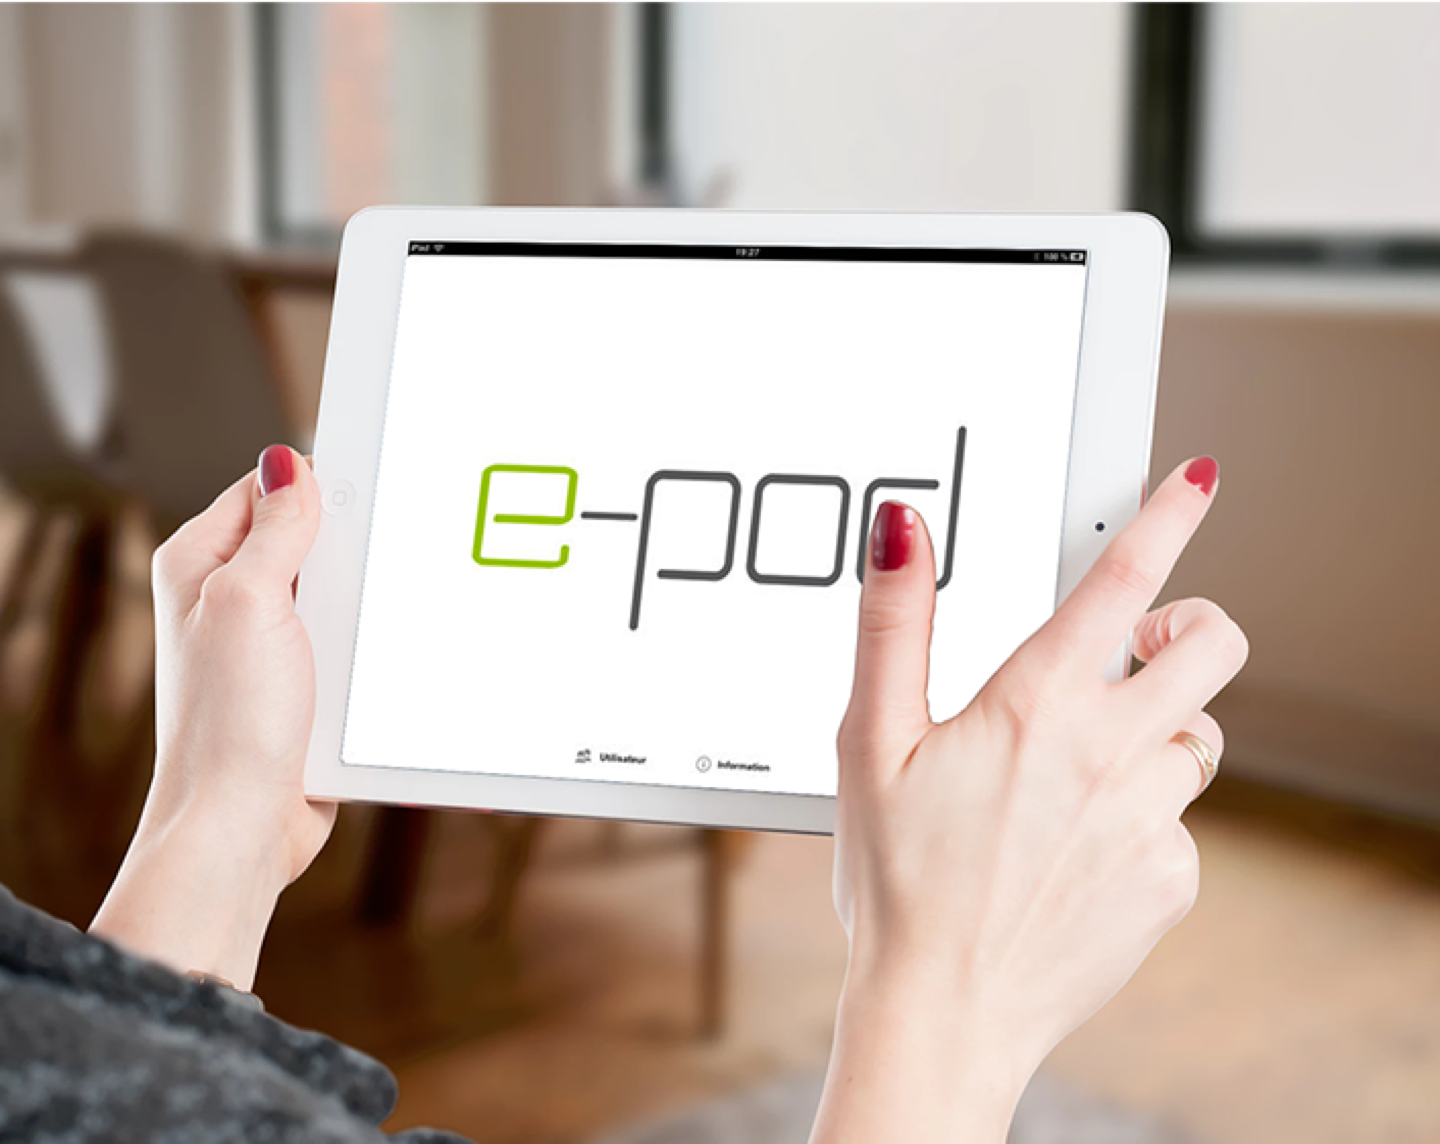 e-pod - Application iPad